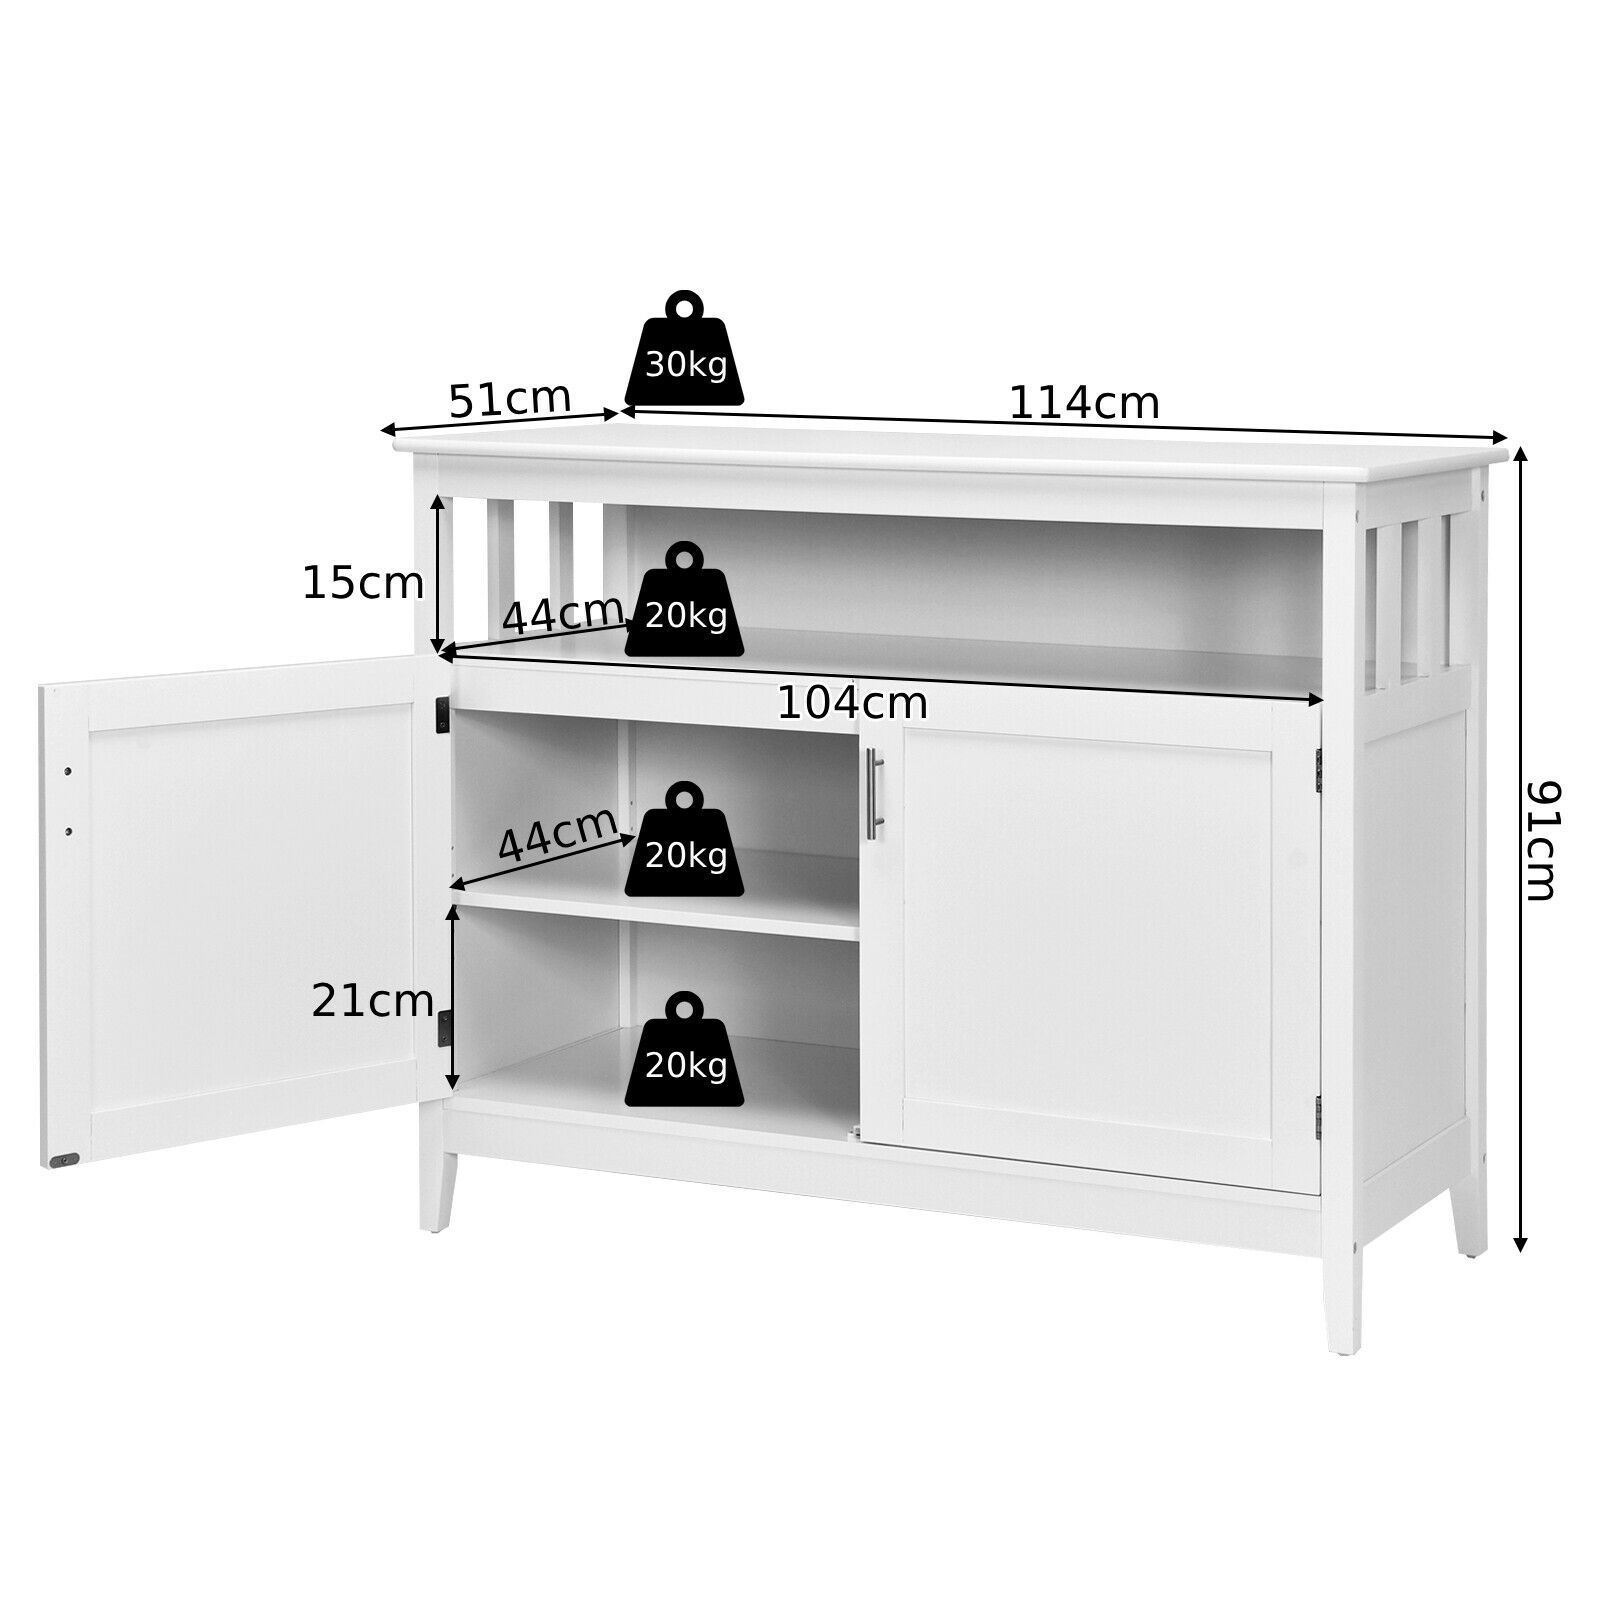 Sideboard with Adjustable Shelves